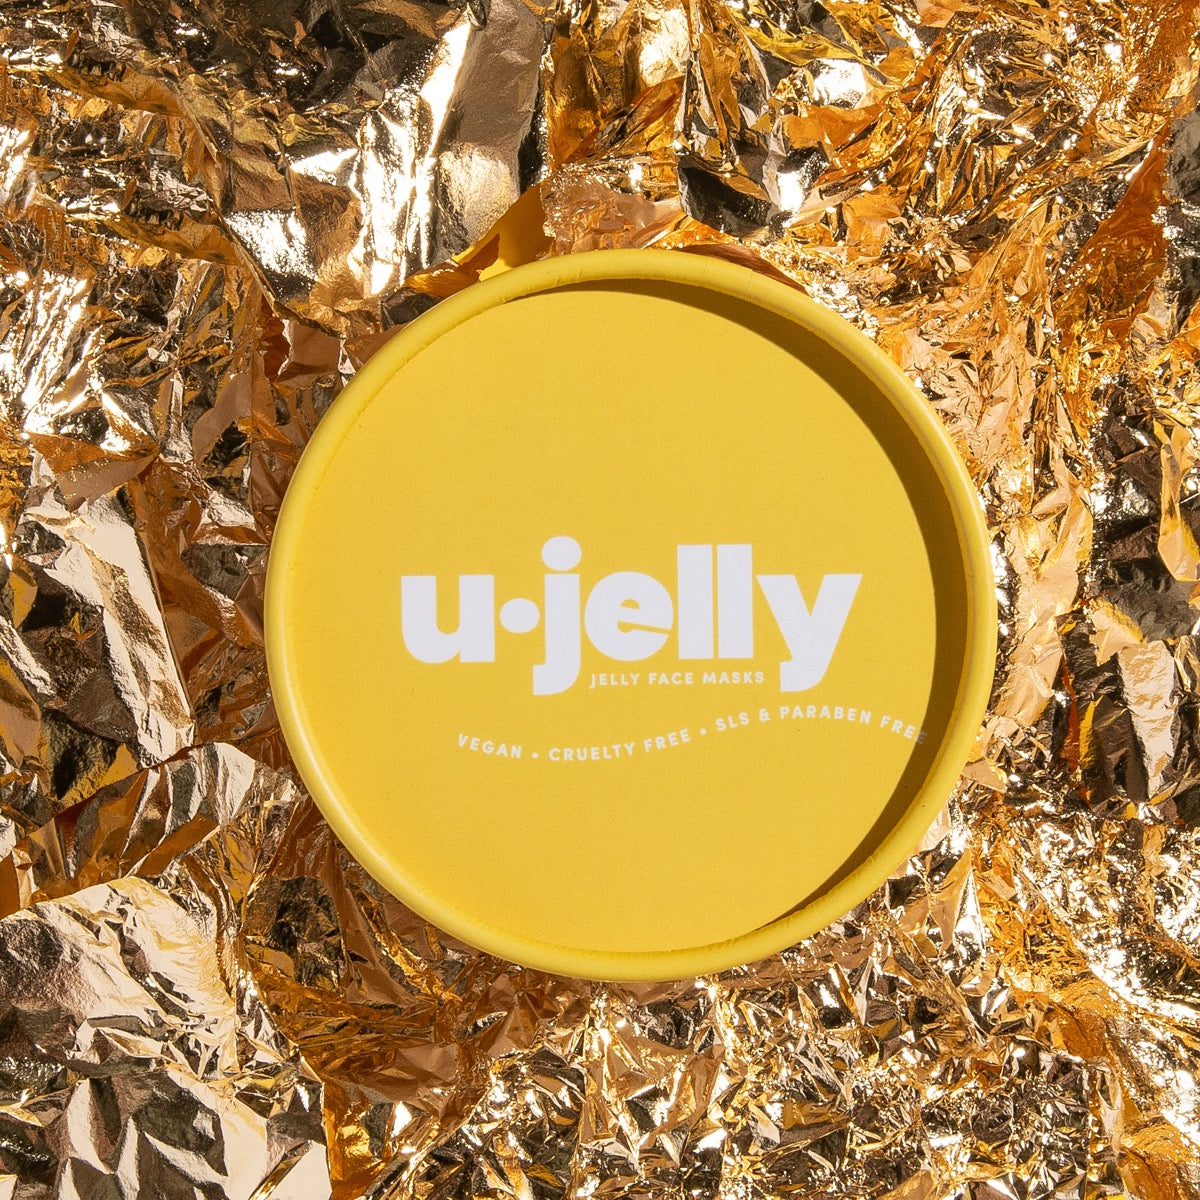 Jelly mask - 24k Gold + Collagen